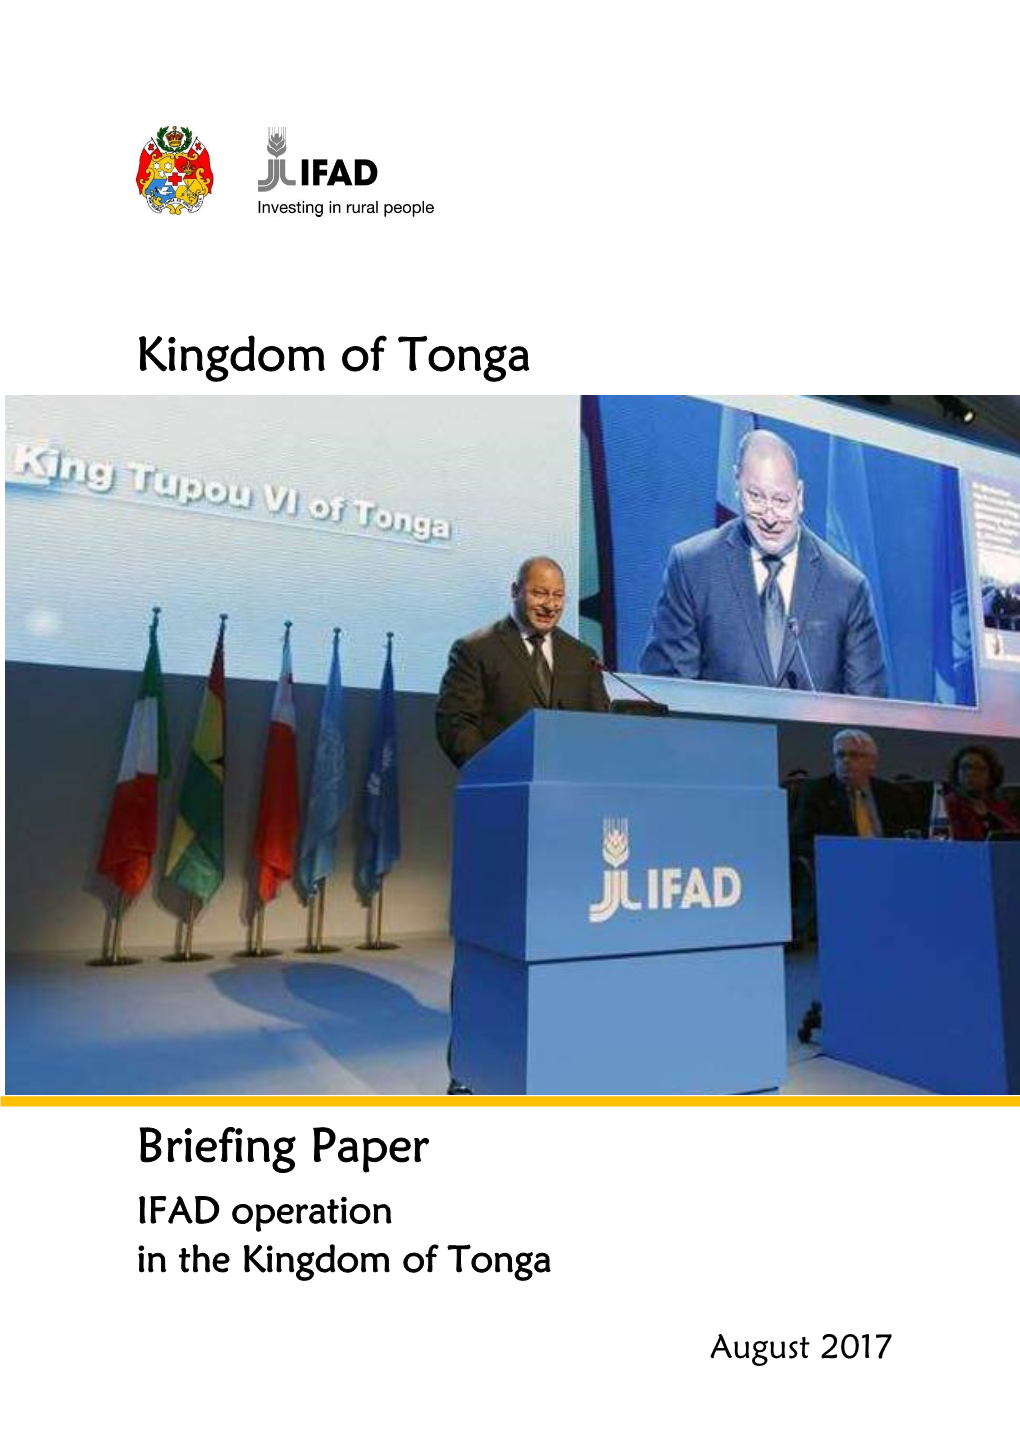 IFAD Operations in the Kingdom of Tonga